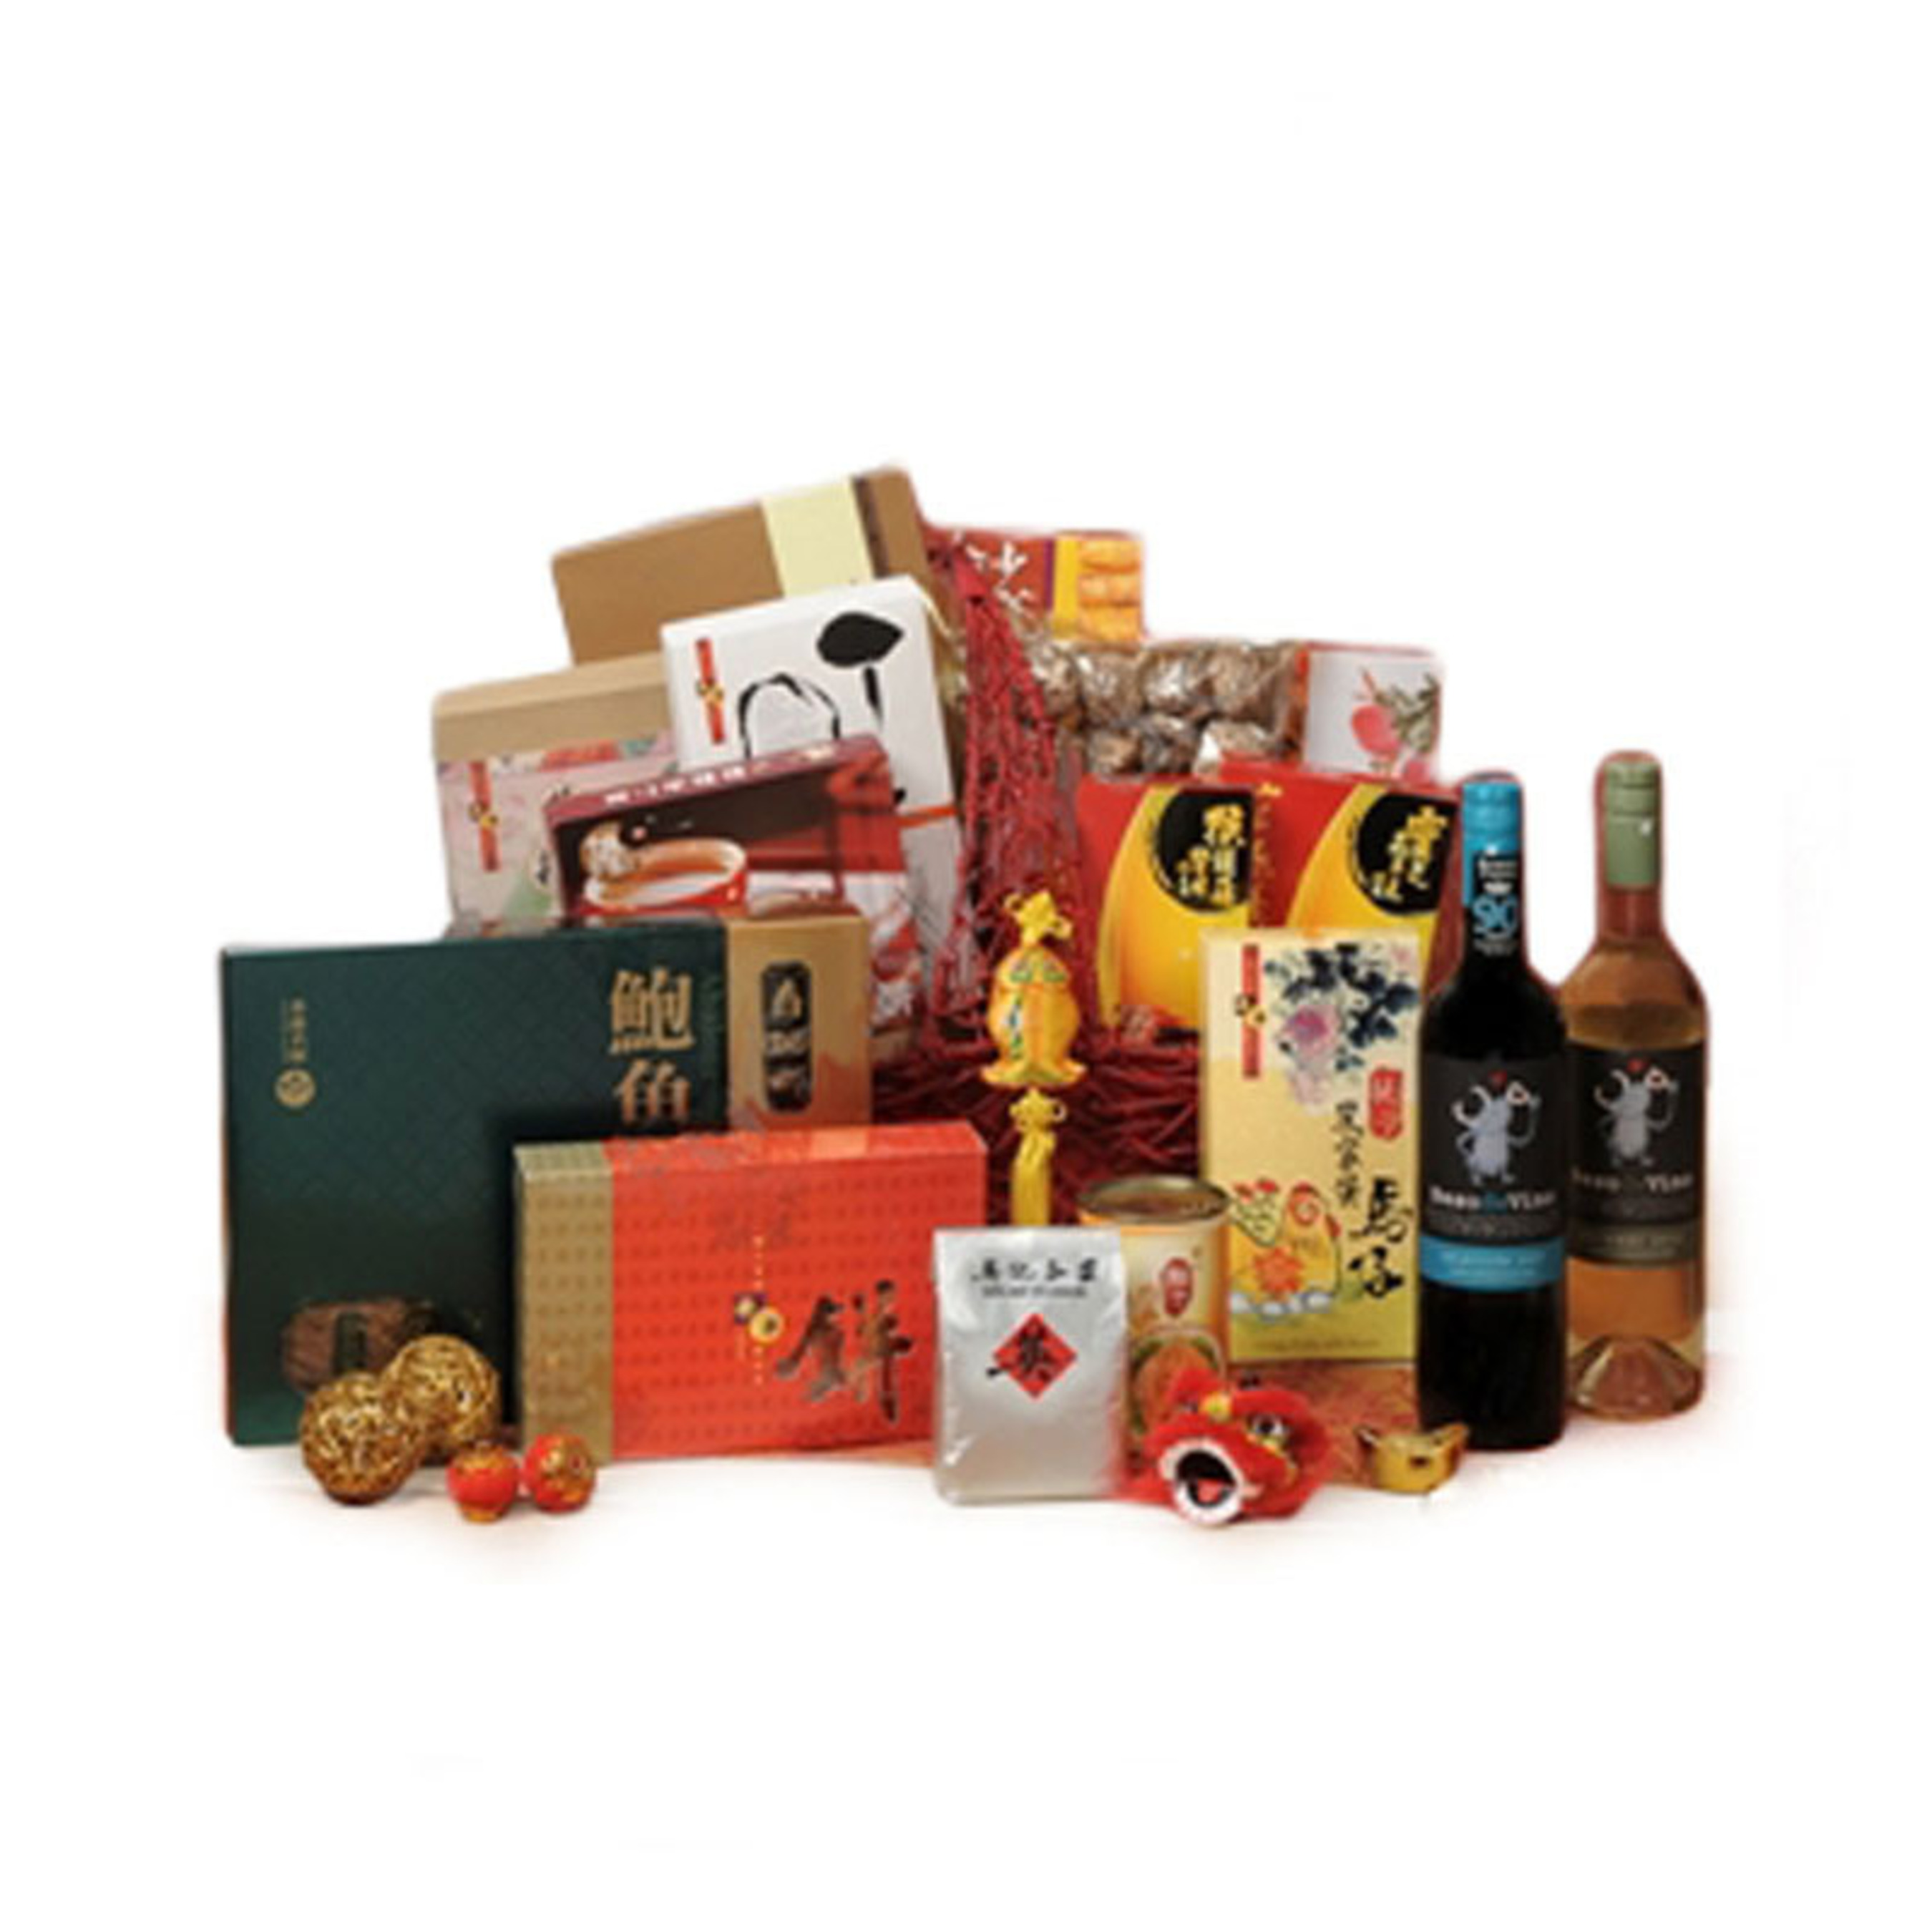 GiftBasketsOverseas.com gift basket for Chinese New Year. (PRNewsFoto/GiftBasketsOverseas.com) (PRNewsFoto/GIFTBASKETSOVERSEAS.COM)